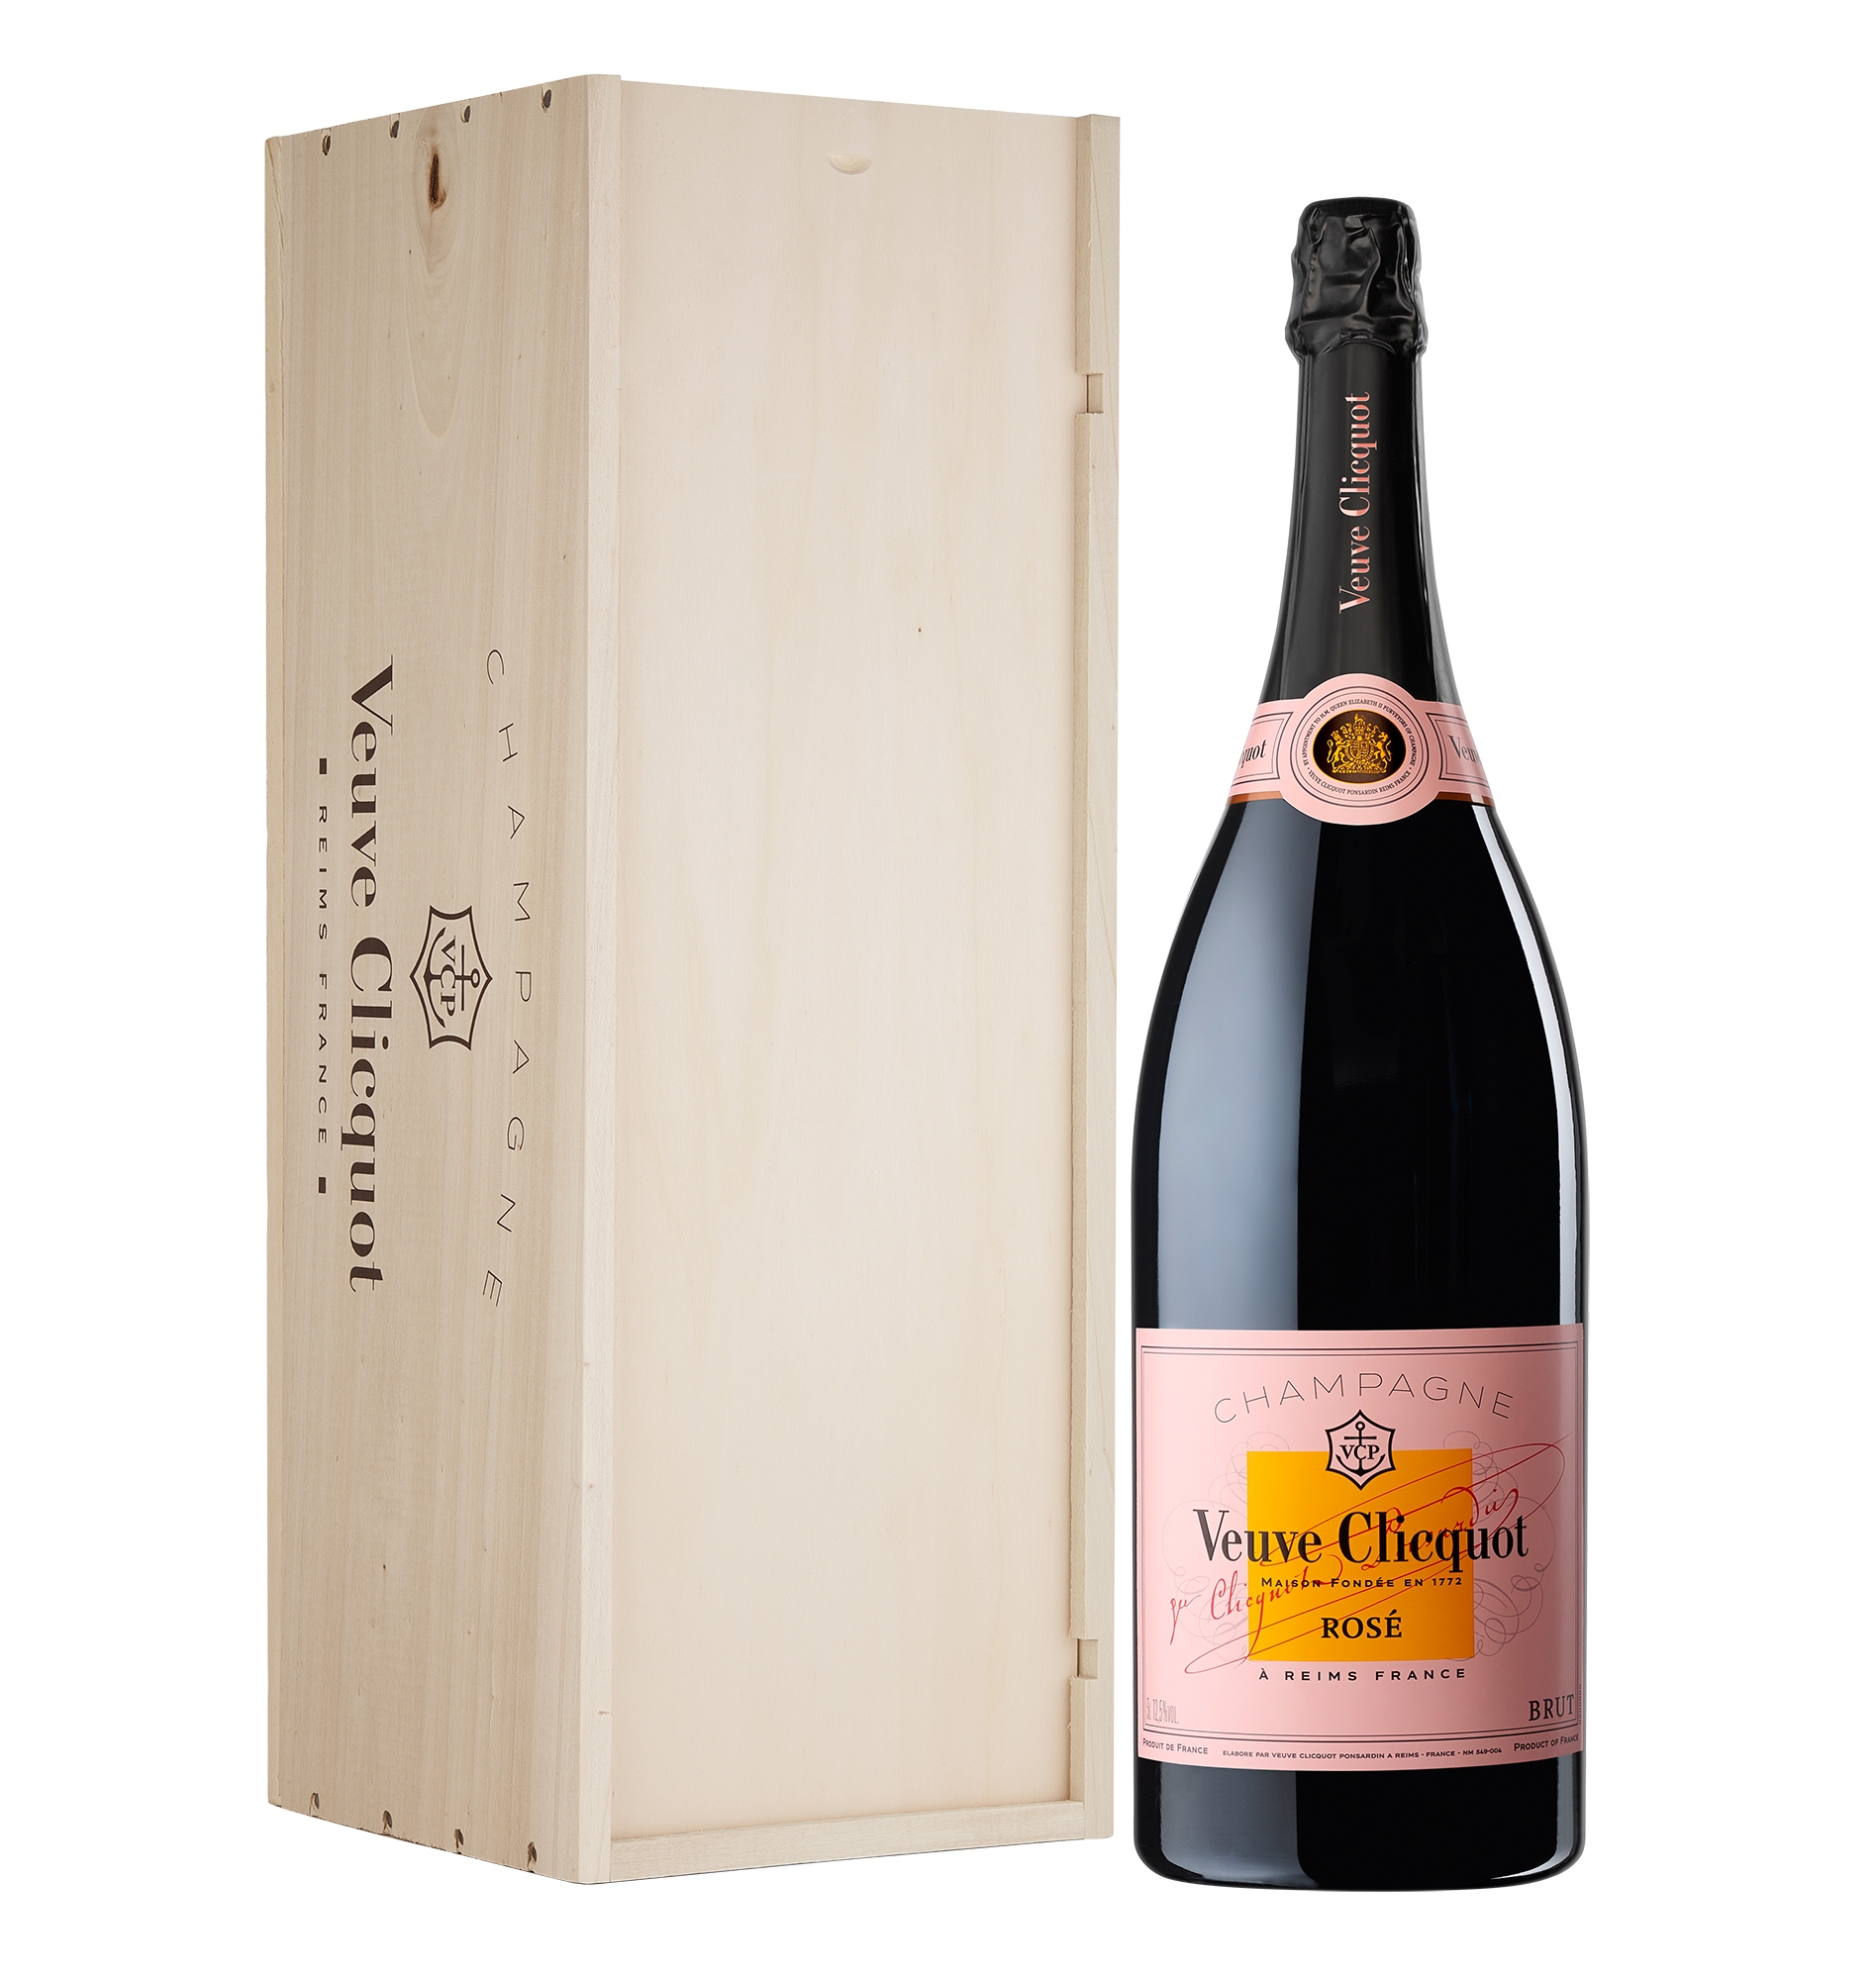 Veuve Clicquot - Brut Champagne Yellow Label NV - Art of Wine